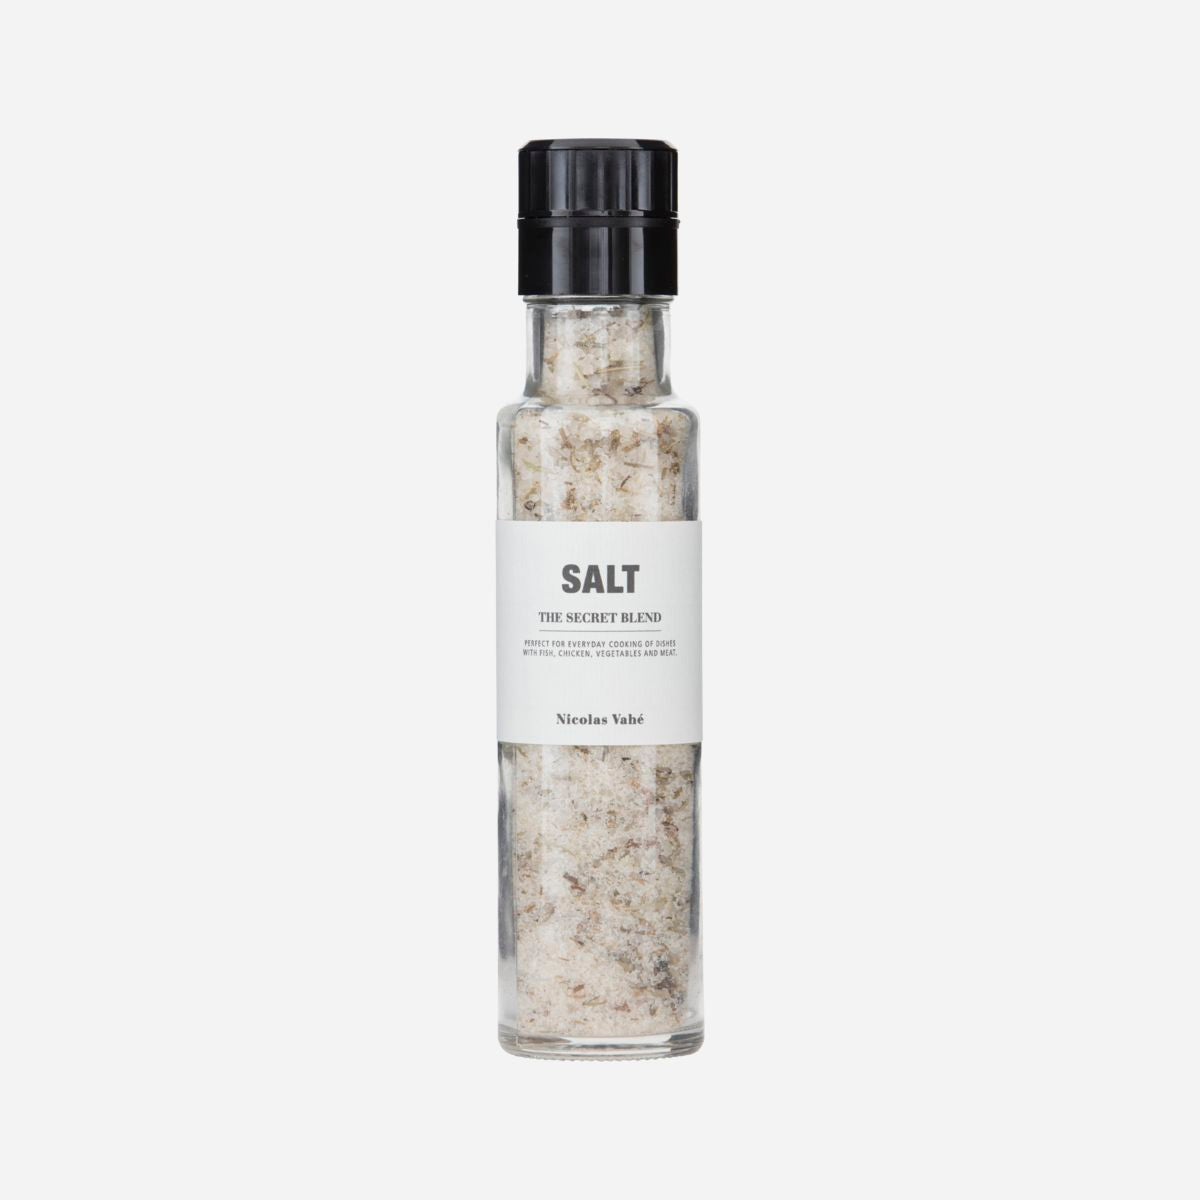 Salt - The secret blend